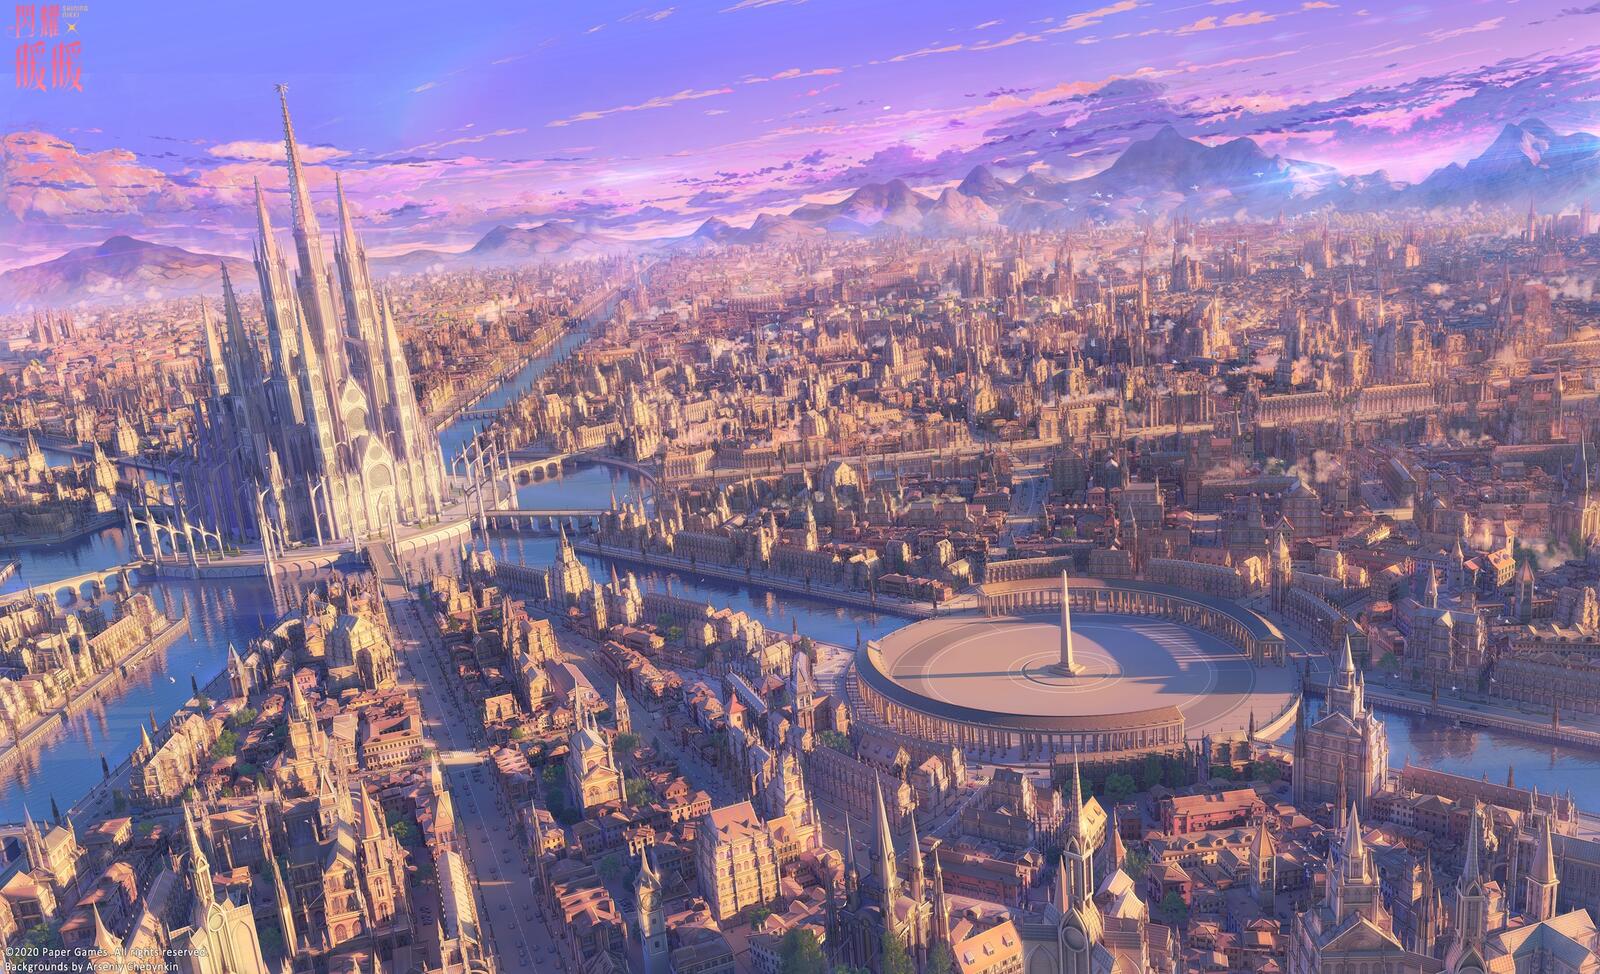 Wallpapers anime urban landscape Arsenixc fantastic world on the desktop